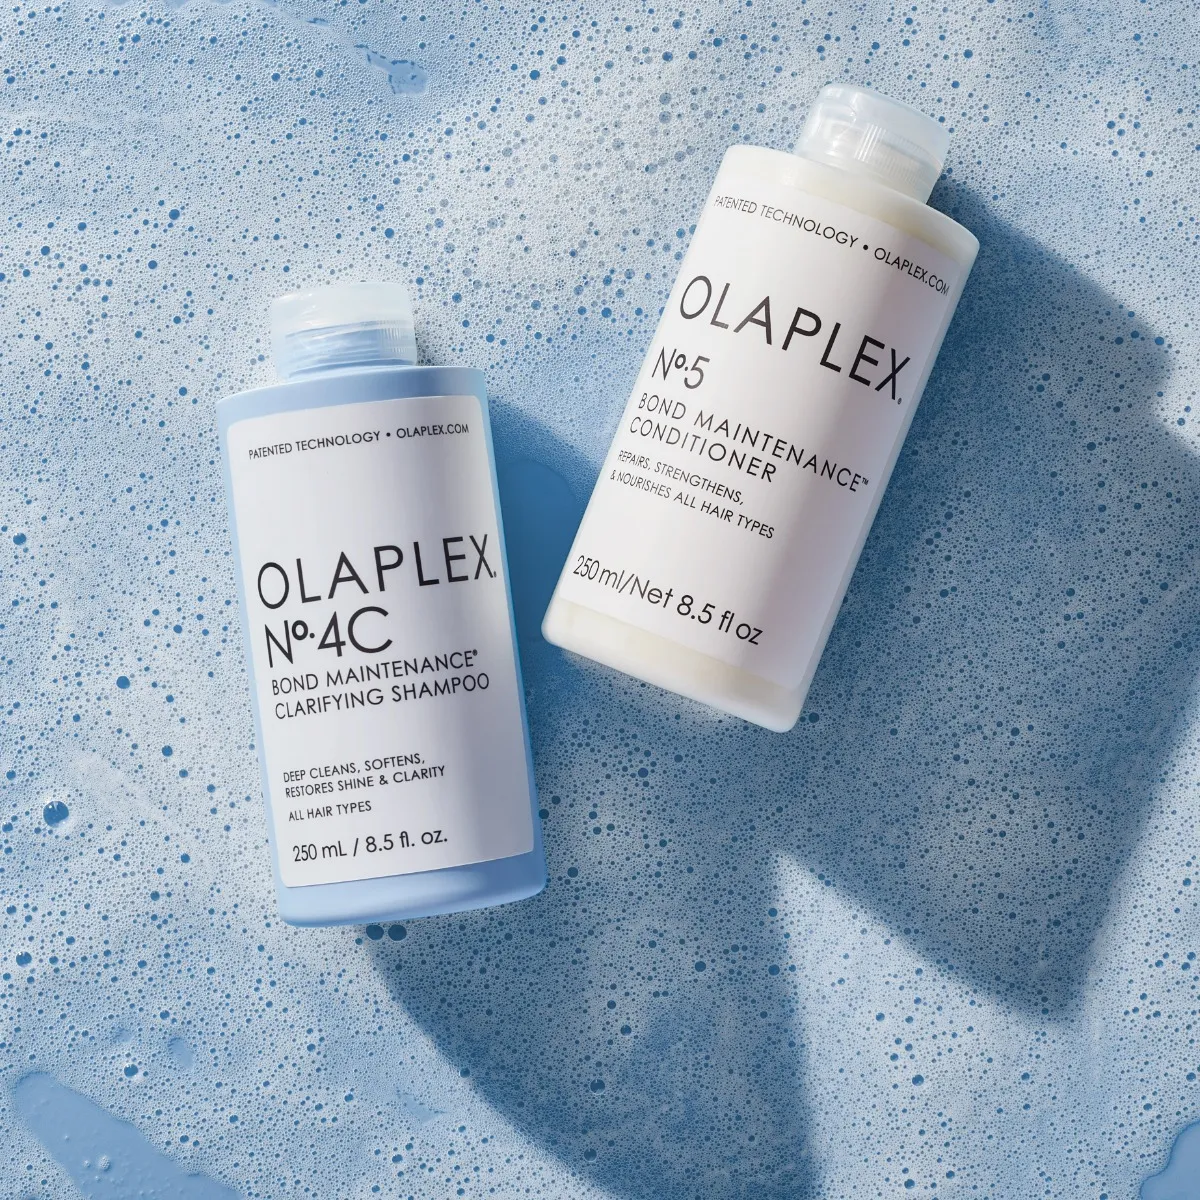 Olaplex N°4C Bond Maintenance Clarifying Shampoo 250 Ml Detergente